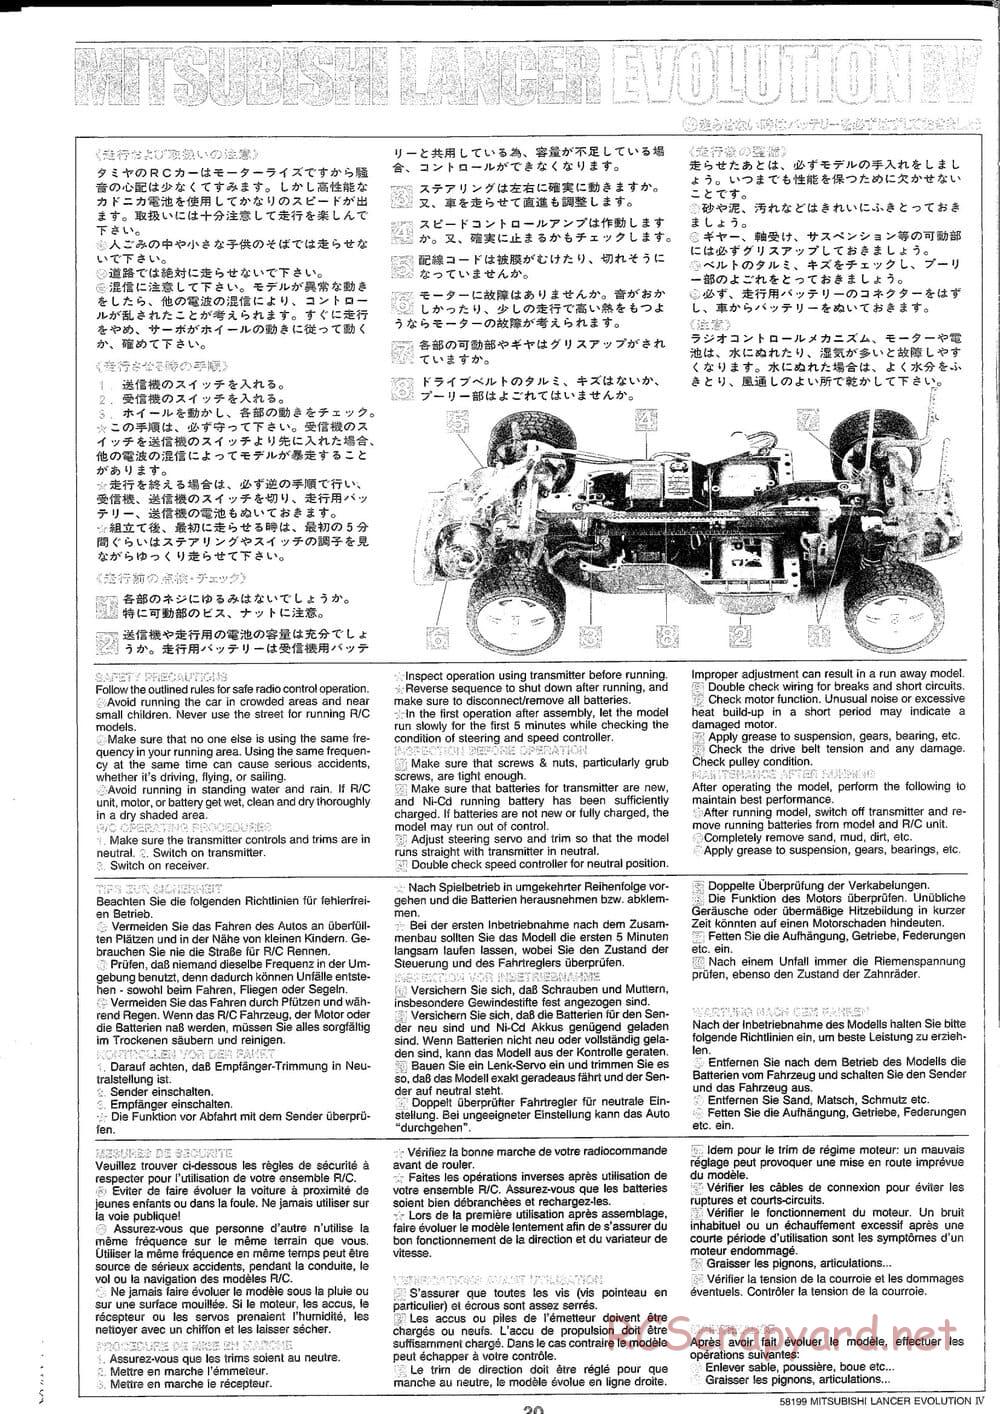 Tamiya - Mitsubishi Lancer Evolution IV - TA-03F Chassis - Manual - Page 20